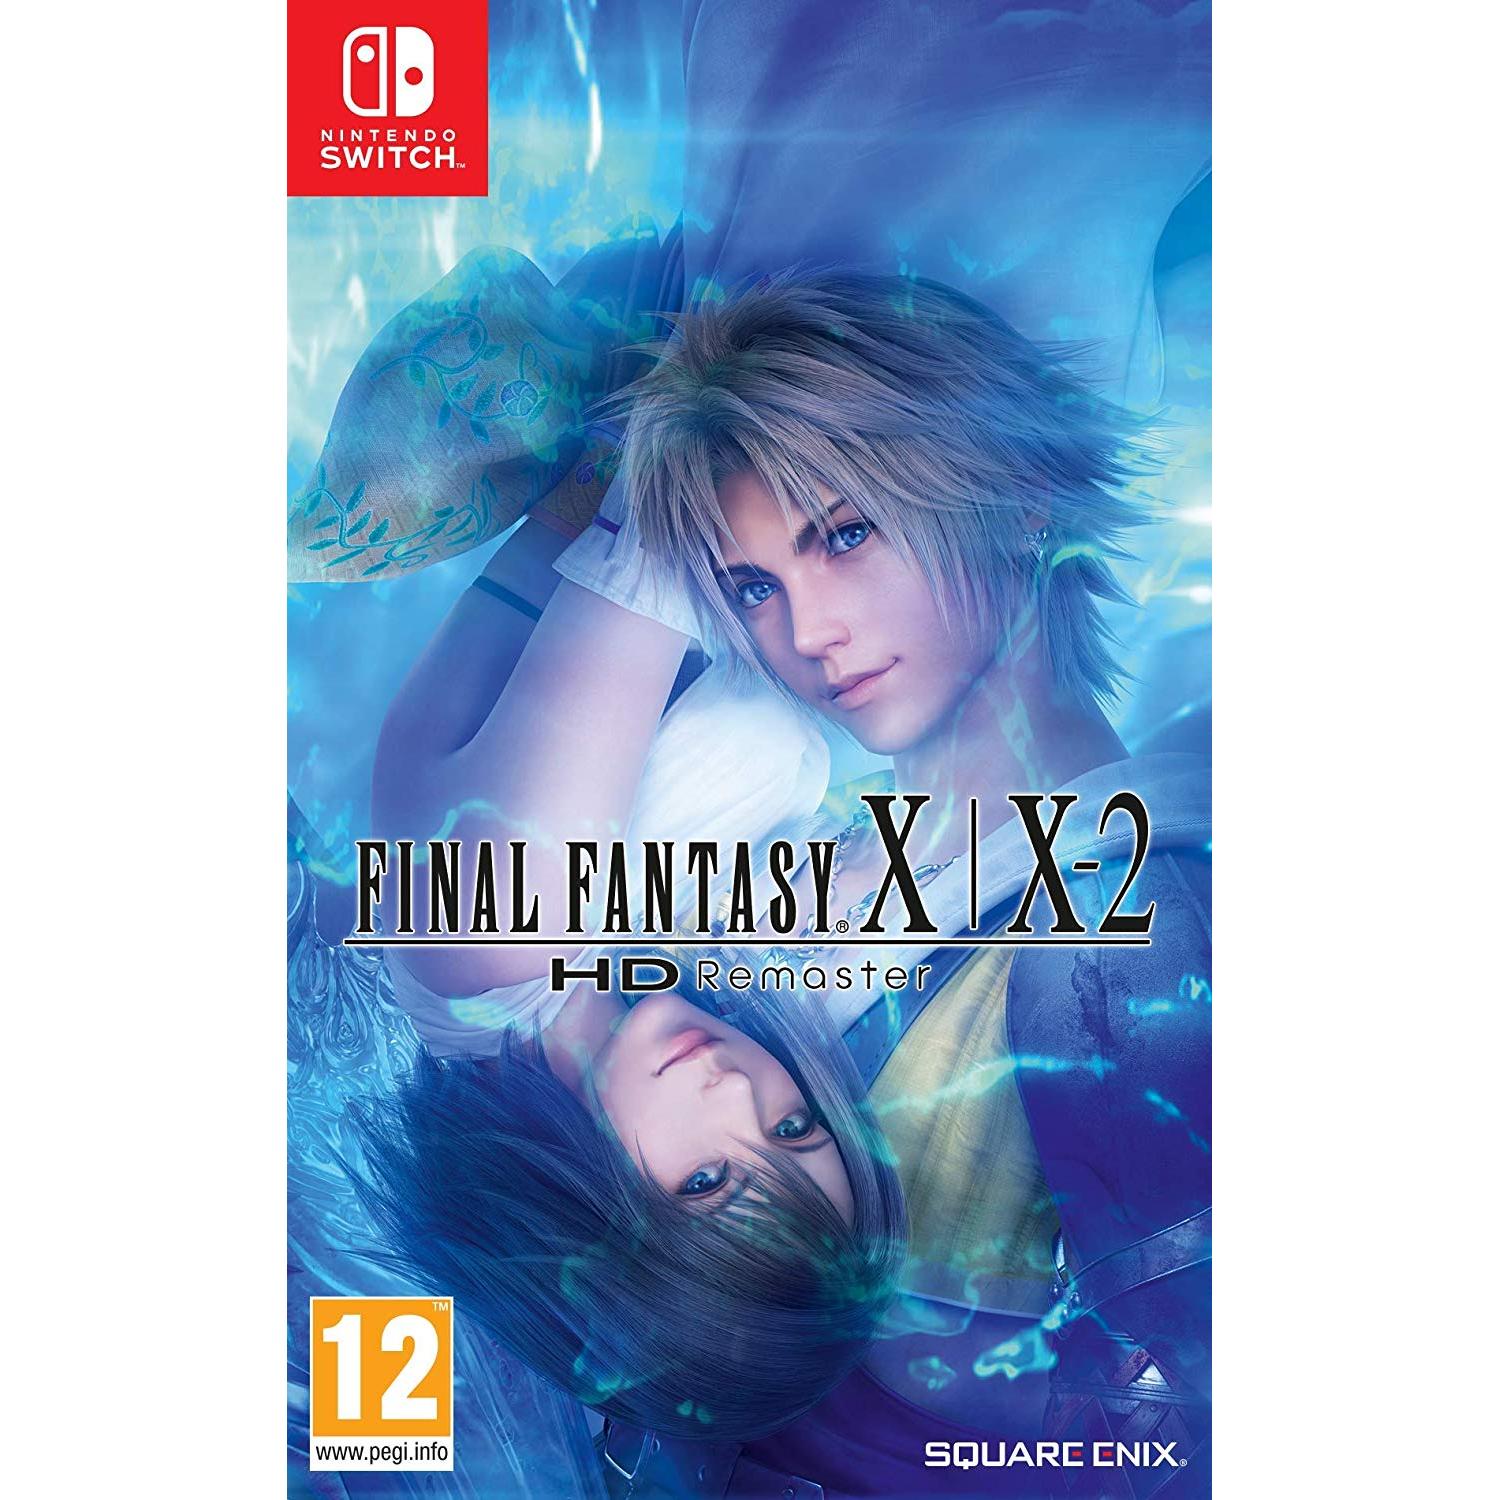 Switch - Final Fantasy X / X-2 - Nintendo Switch - Pal España - Nuevo precintado